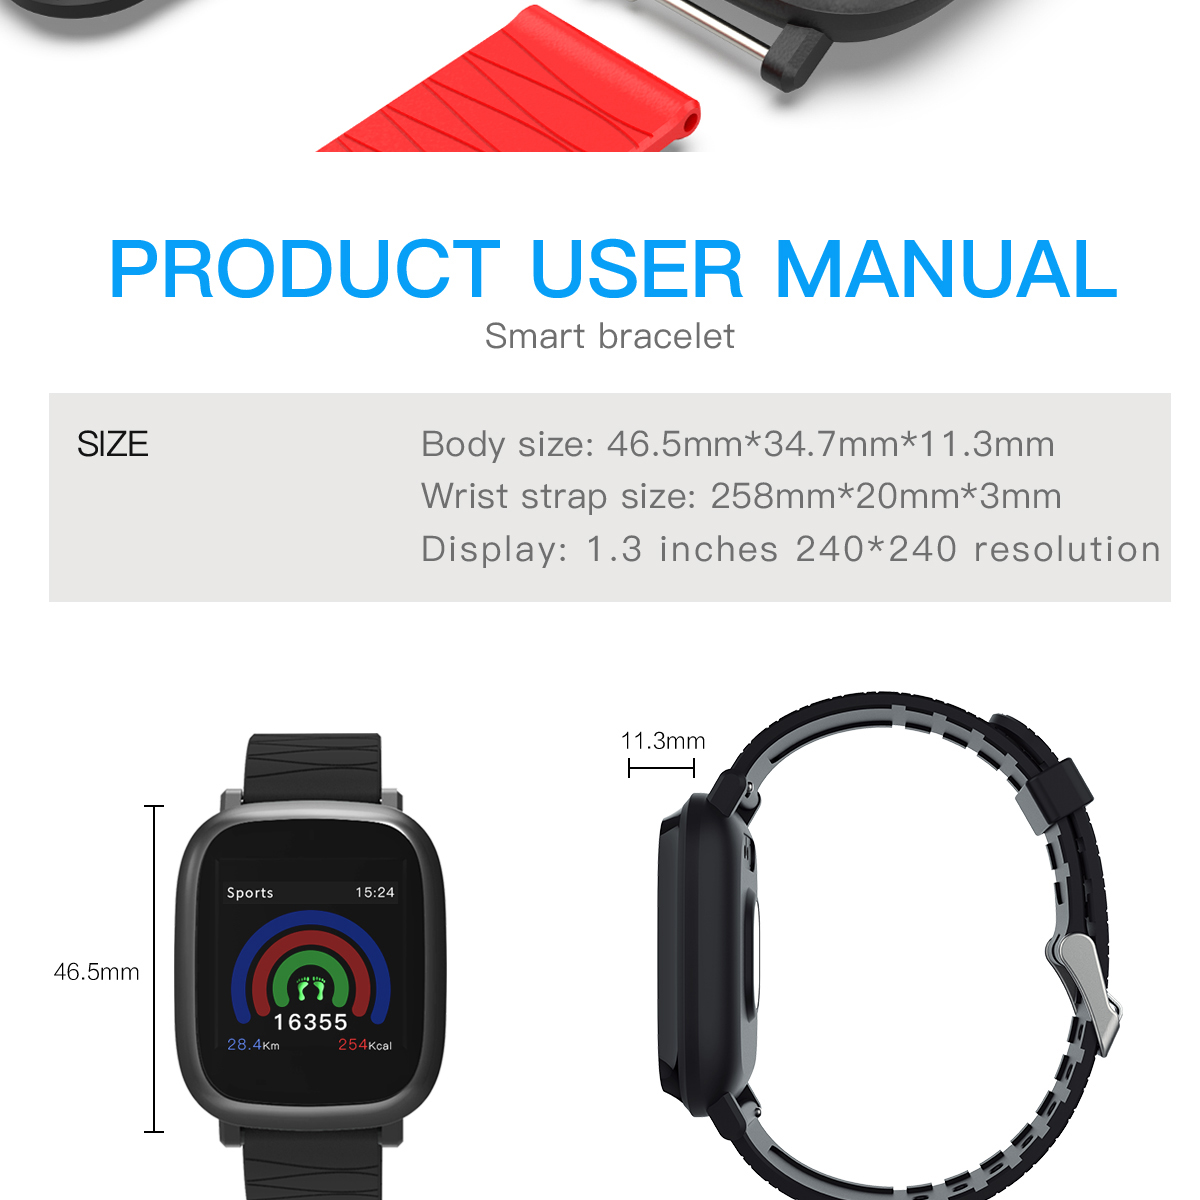 Smartwatch user manual pdf